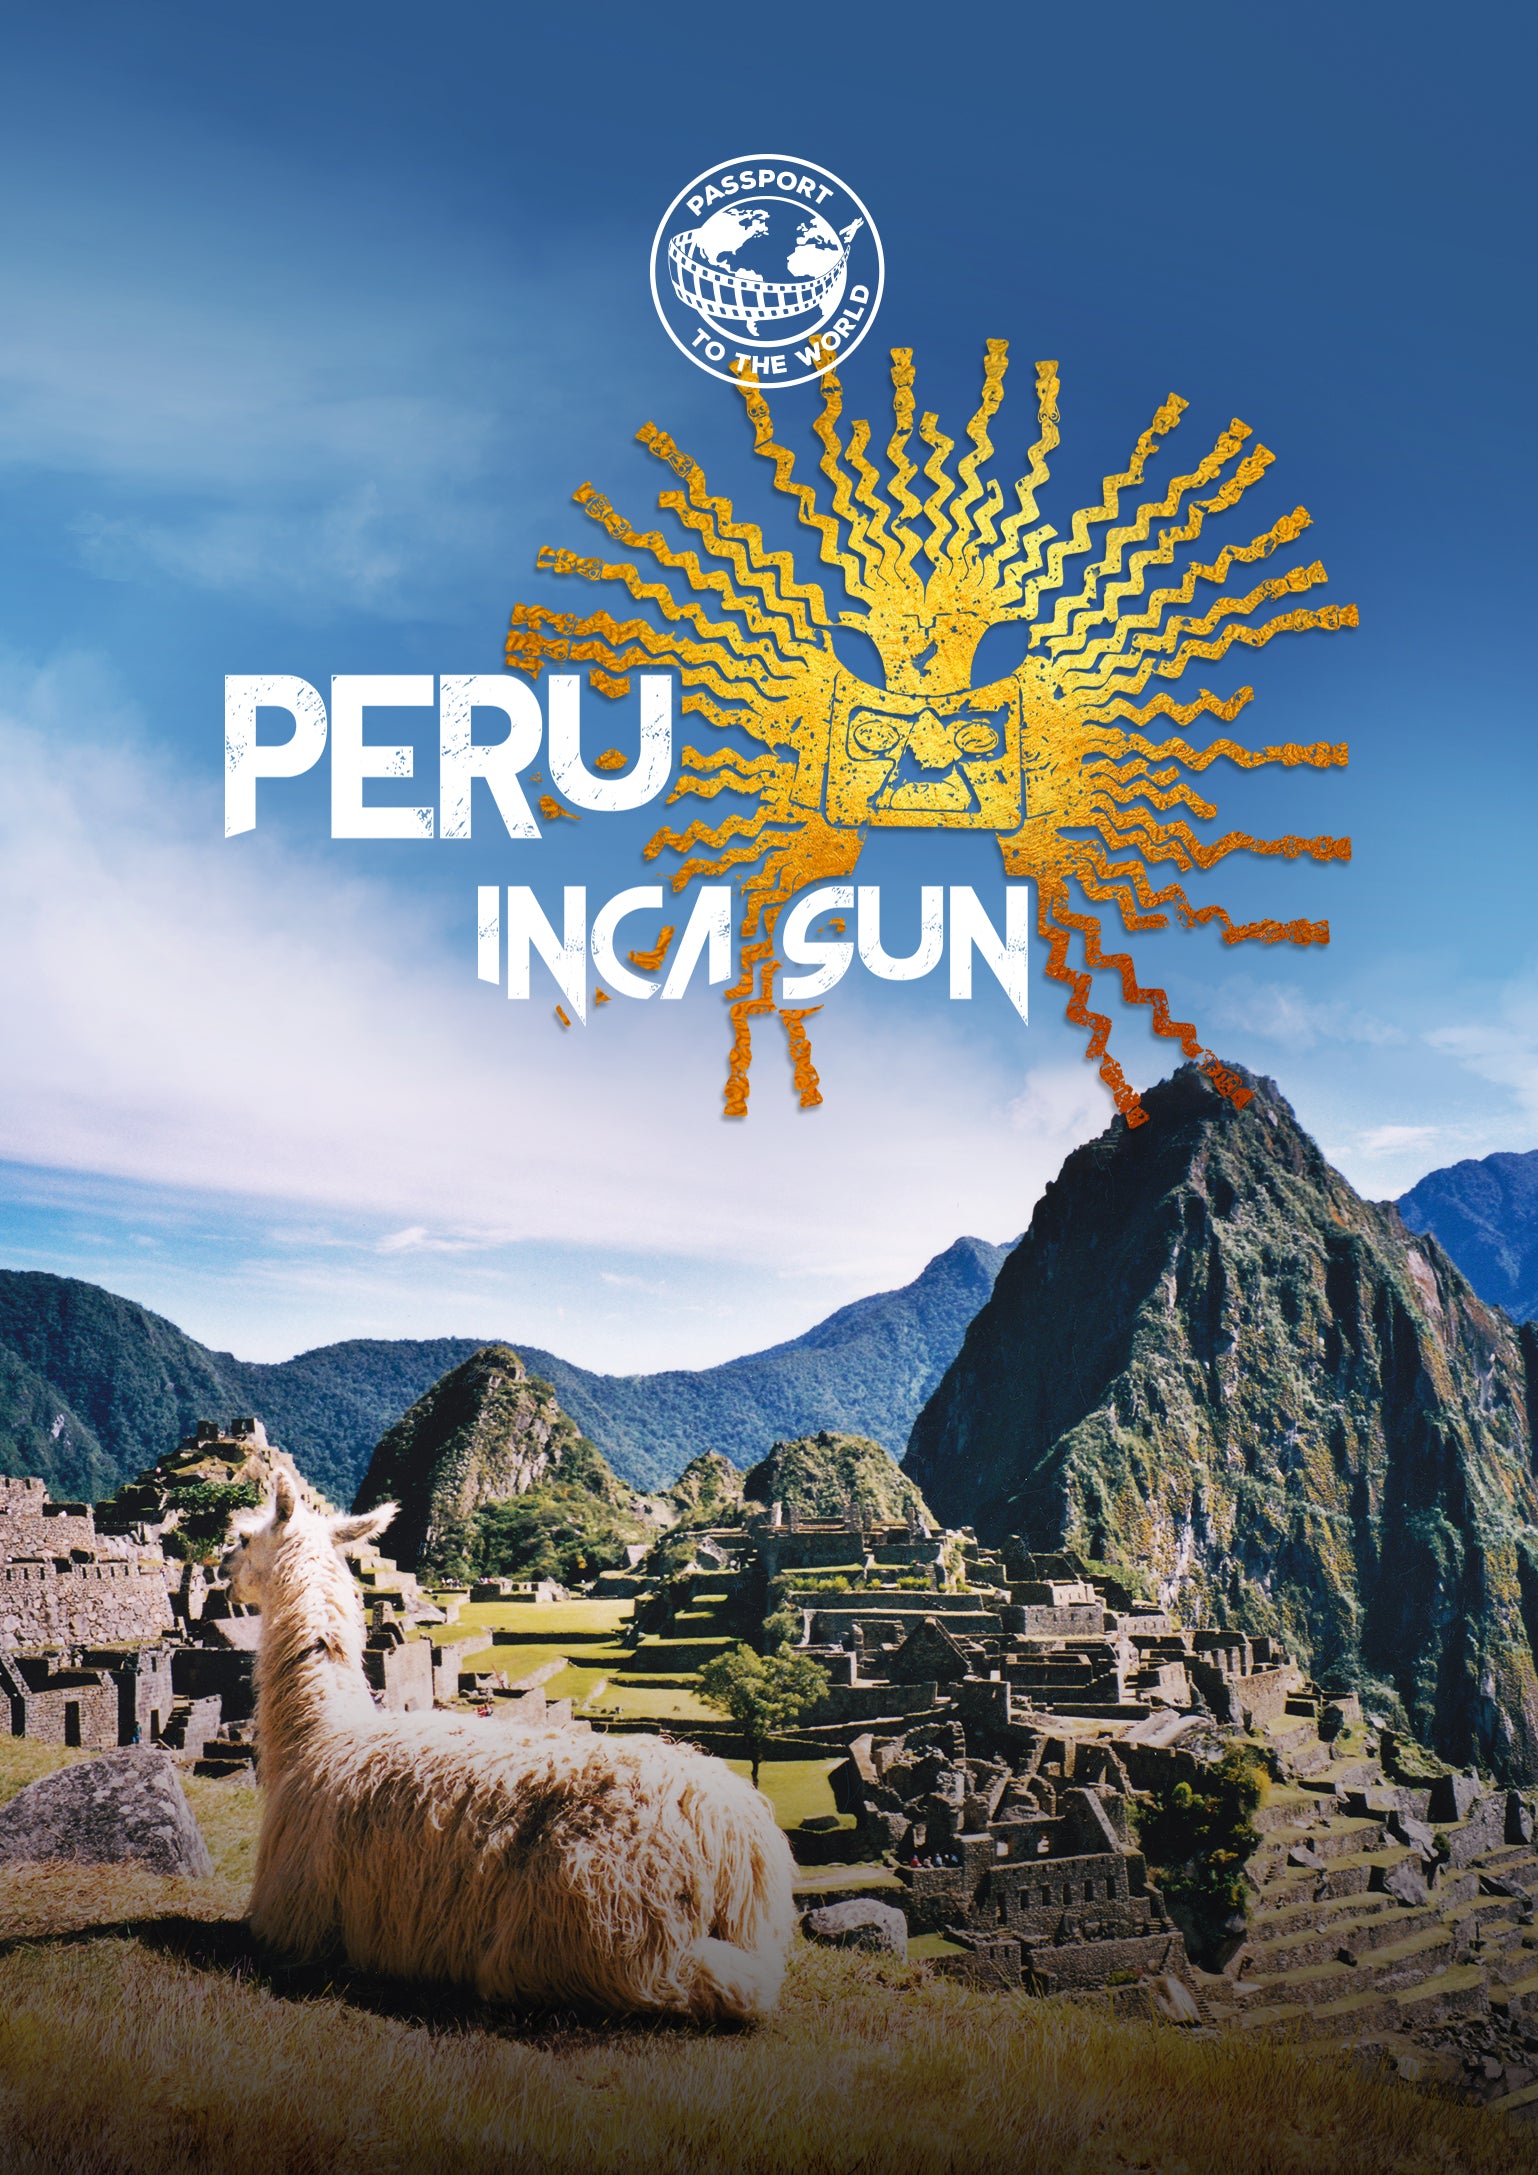 Passport to the World: Peru - Inca Sun cover art